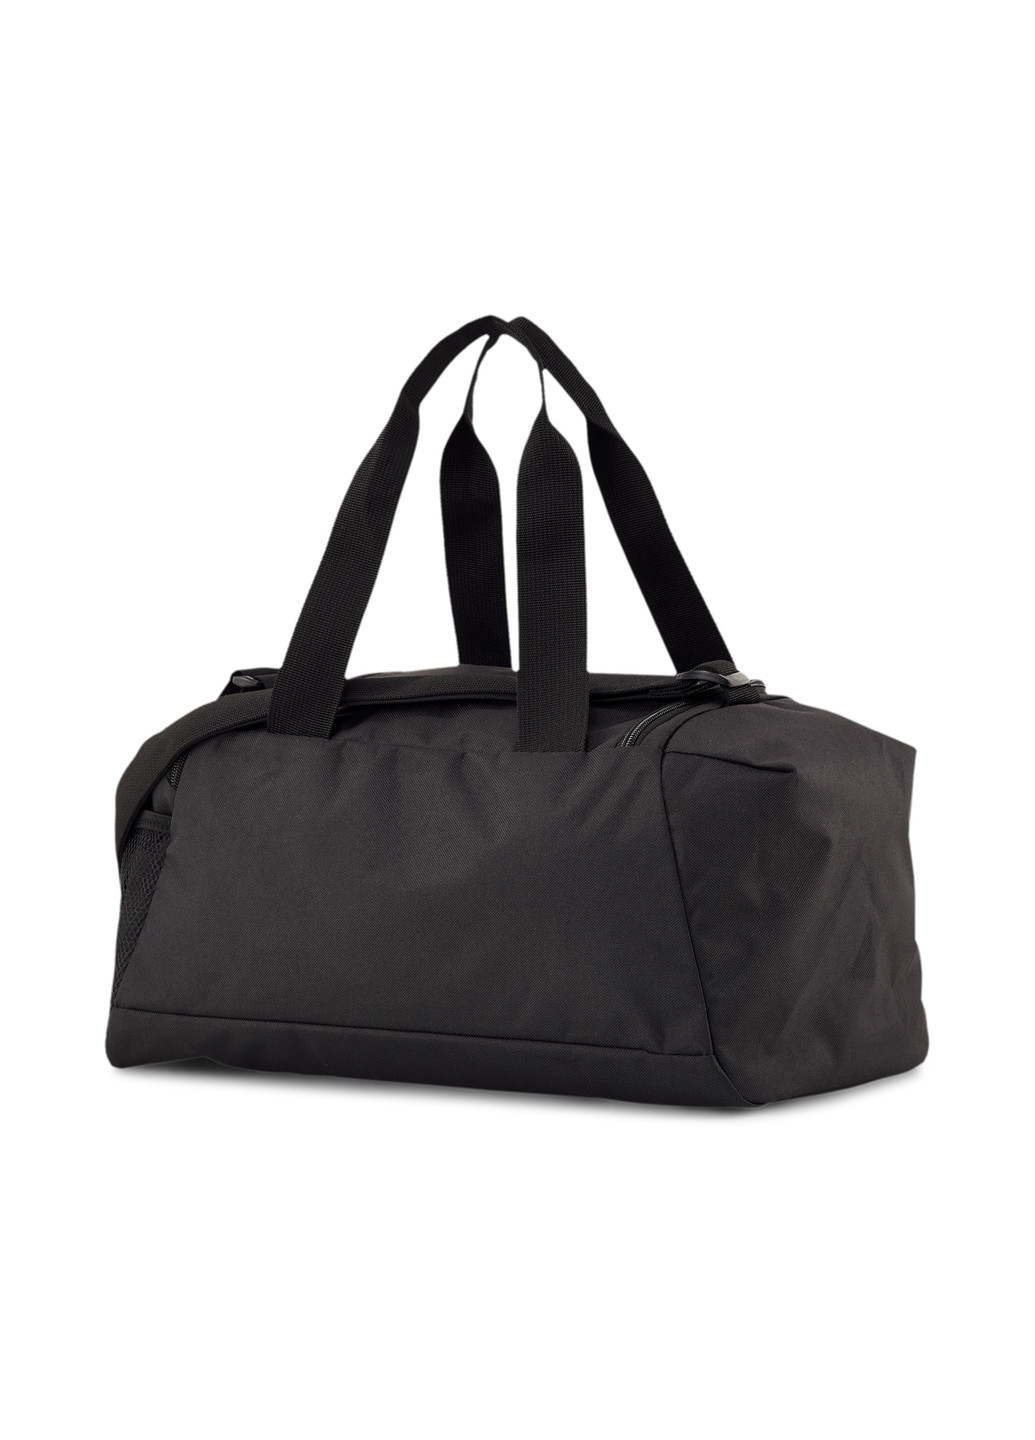 Сумка Puma Fundamentals Sports Bag XS чёрная спортивная